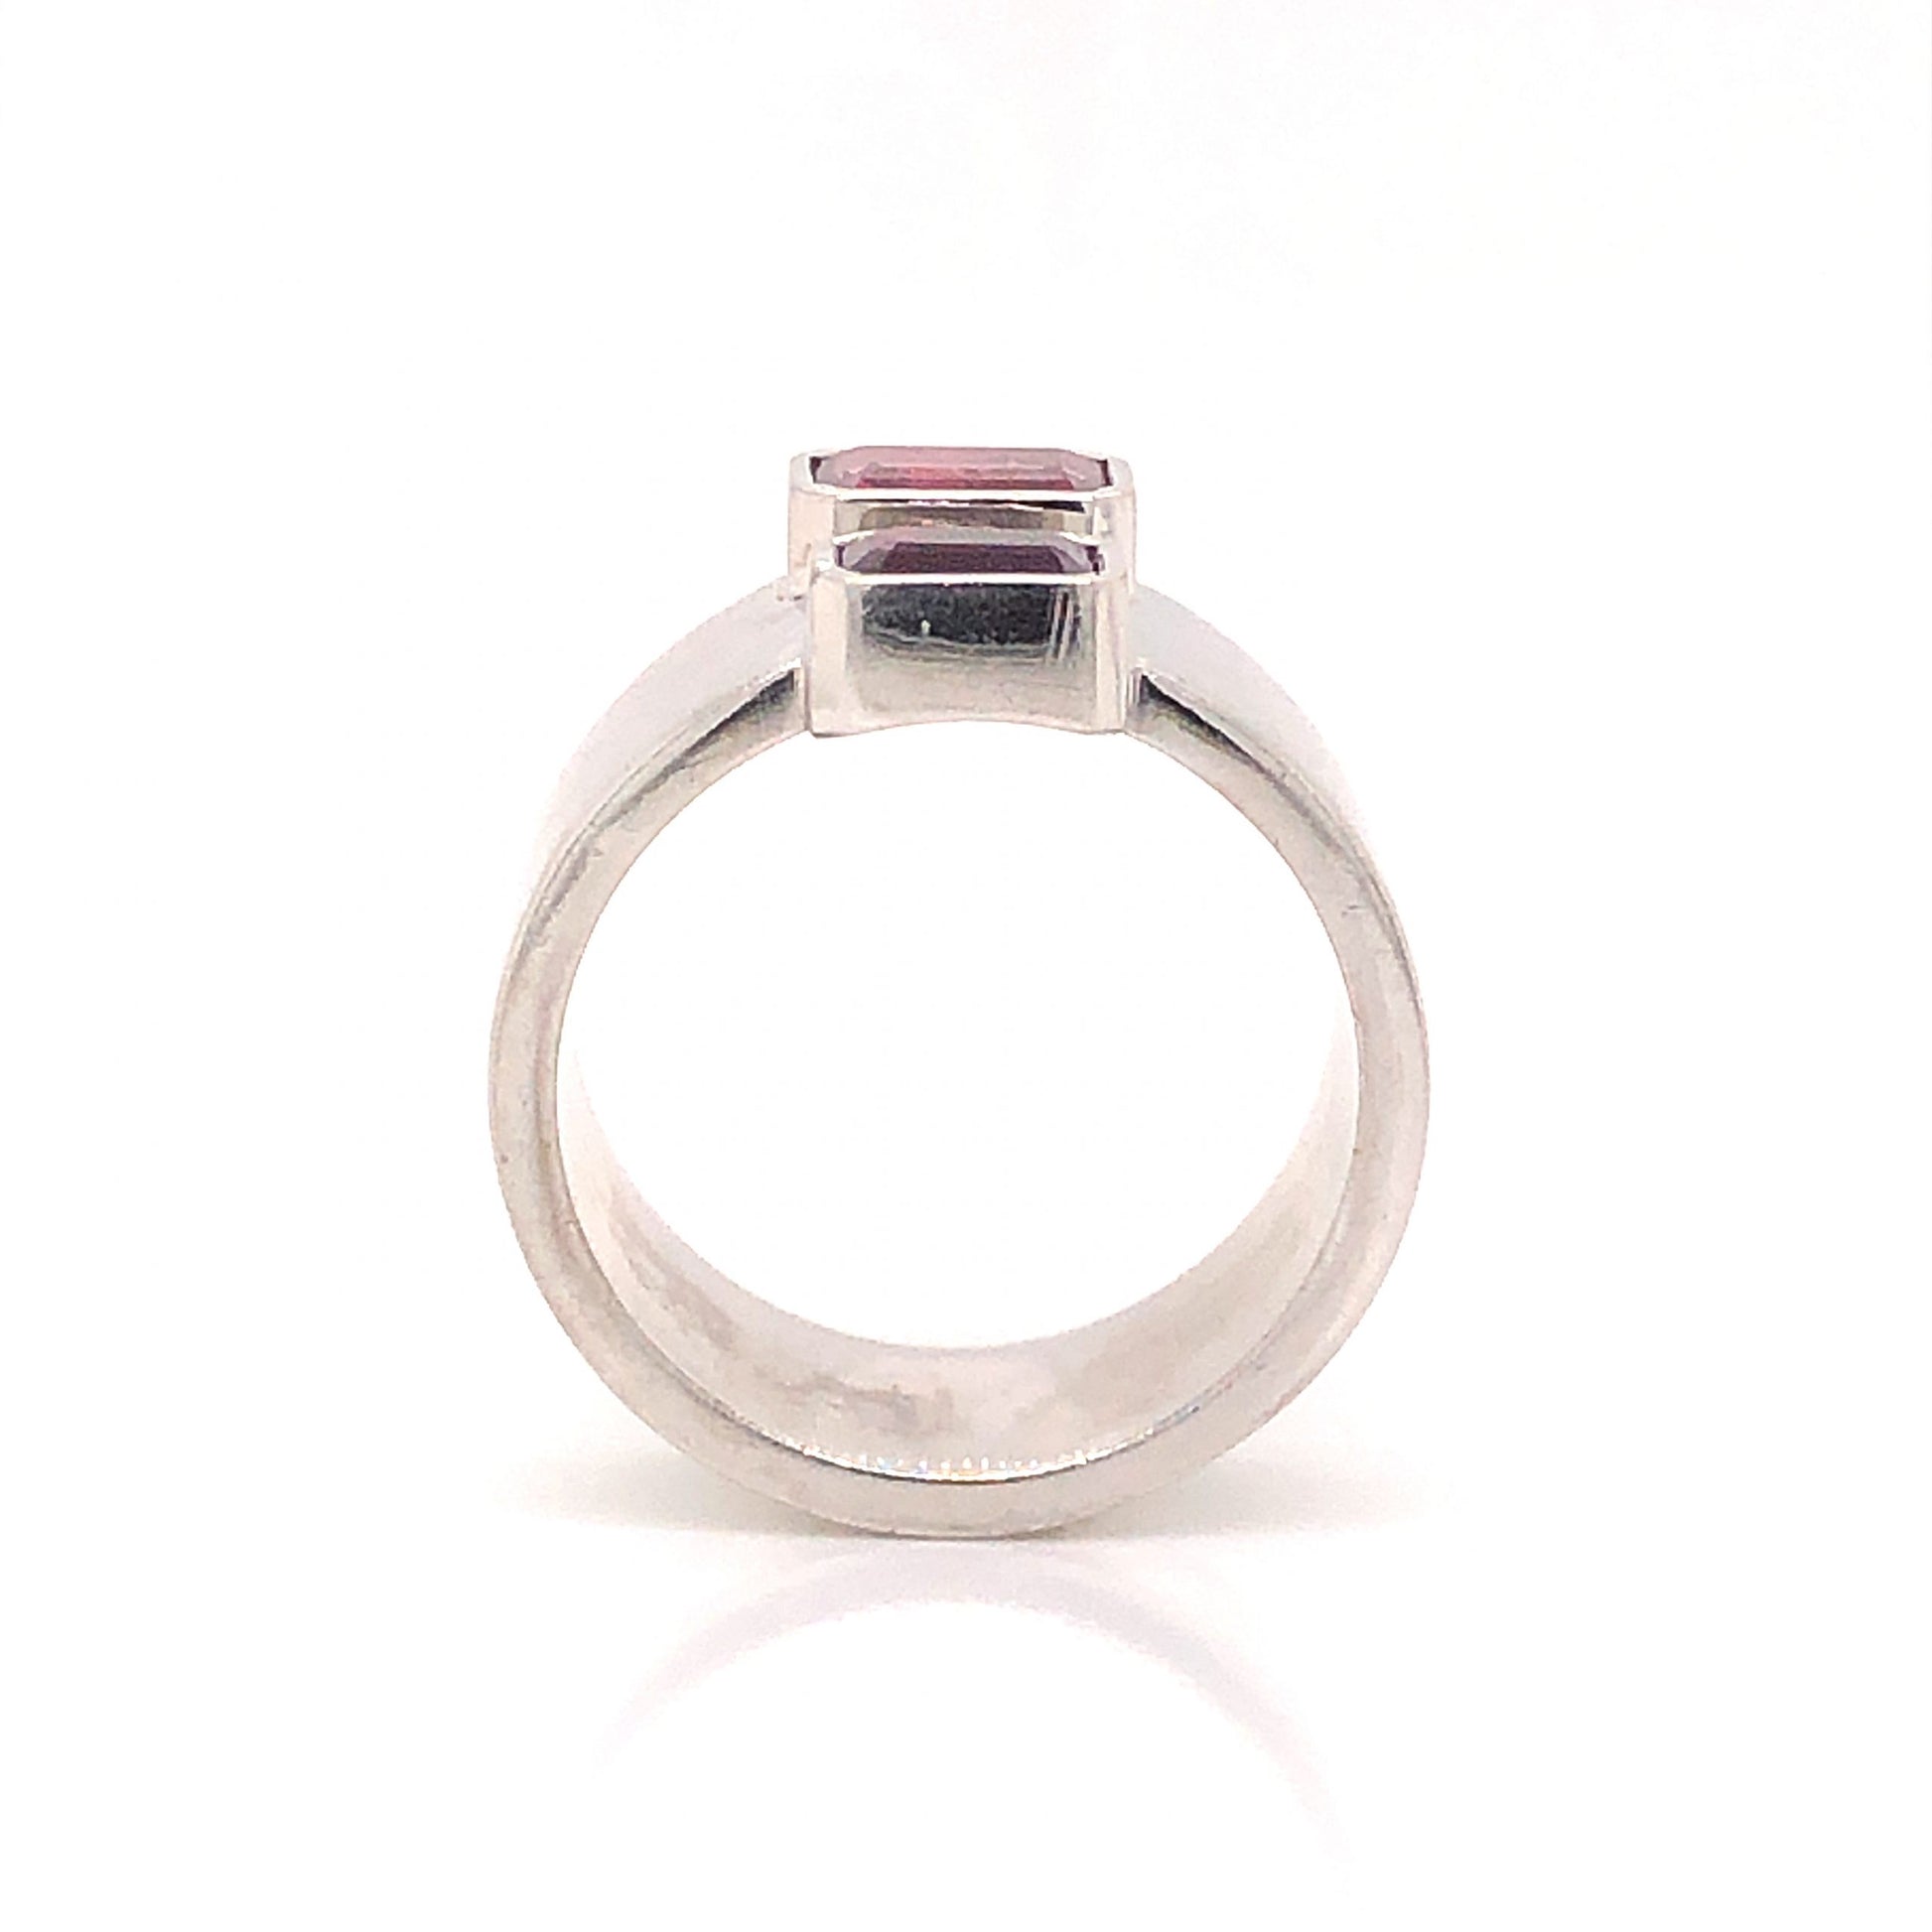 Emerald Cut Pink Tourmaline Ring in 14k White GoldComposition: 14 Karat White GoldRing Size: 8Total Gram Weight: 14.8 gInscription: 14k